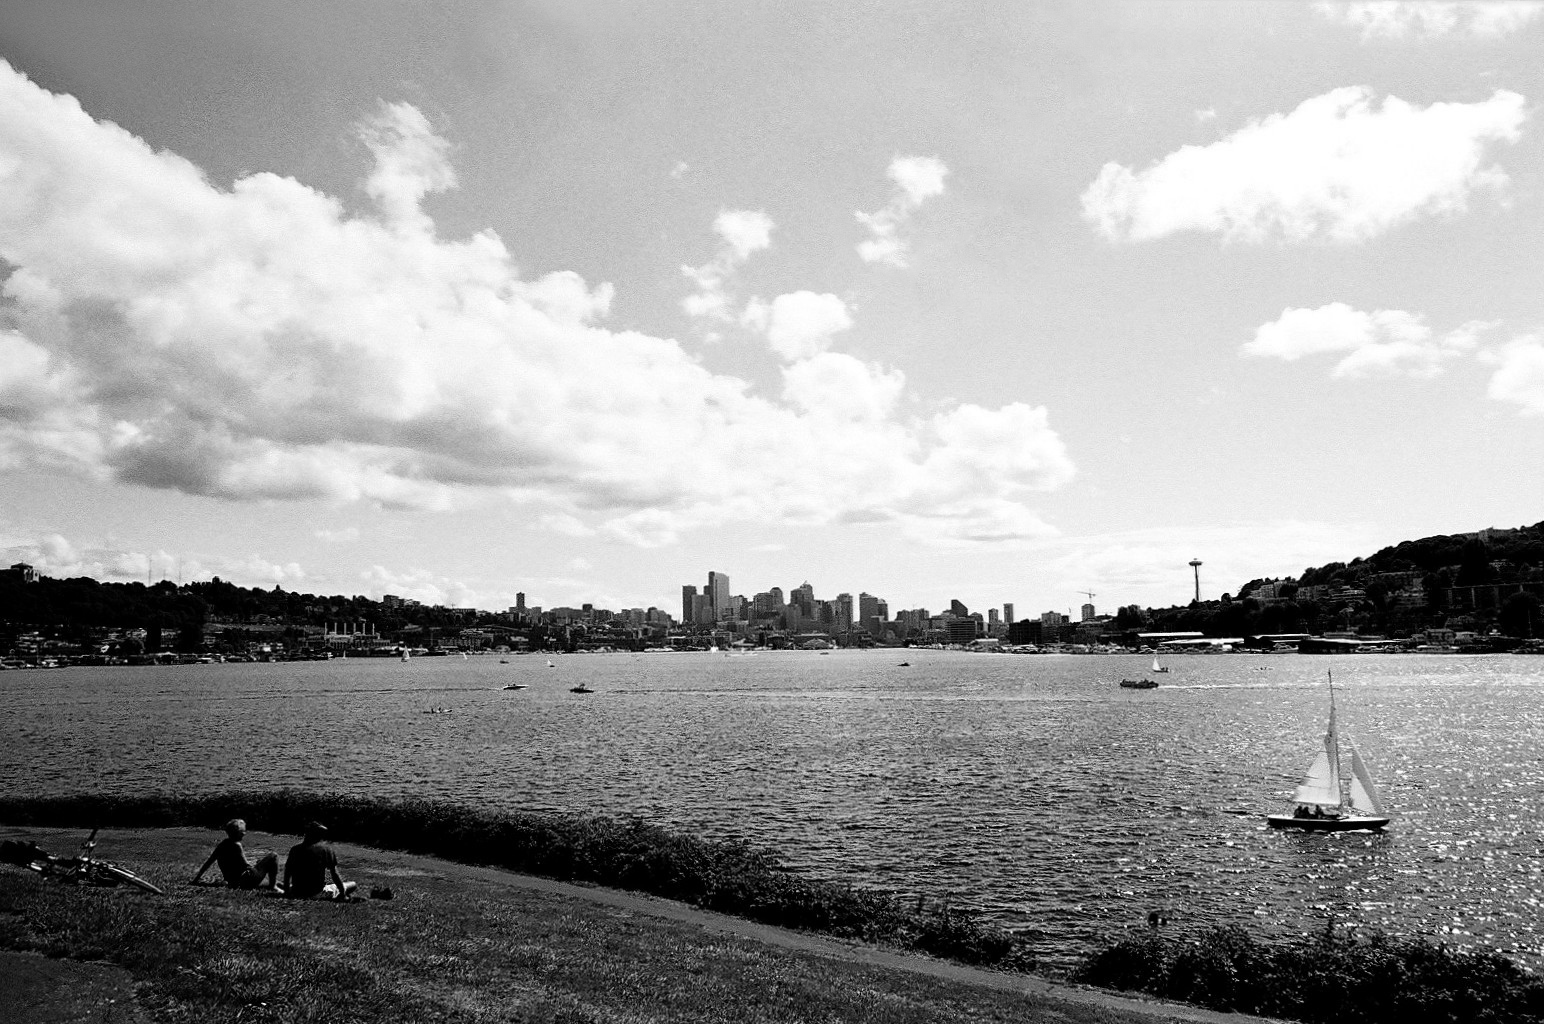  View of downtown from Gas Works Park, Seattle, Washington  August 2013     Olympus OM-1n  Kodak Tri-X 400 